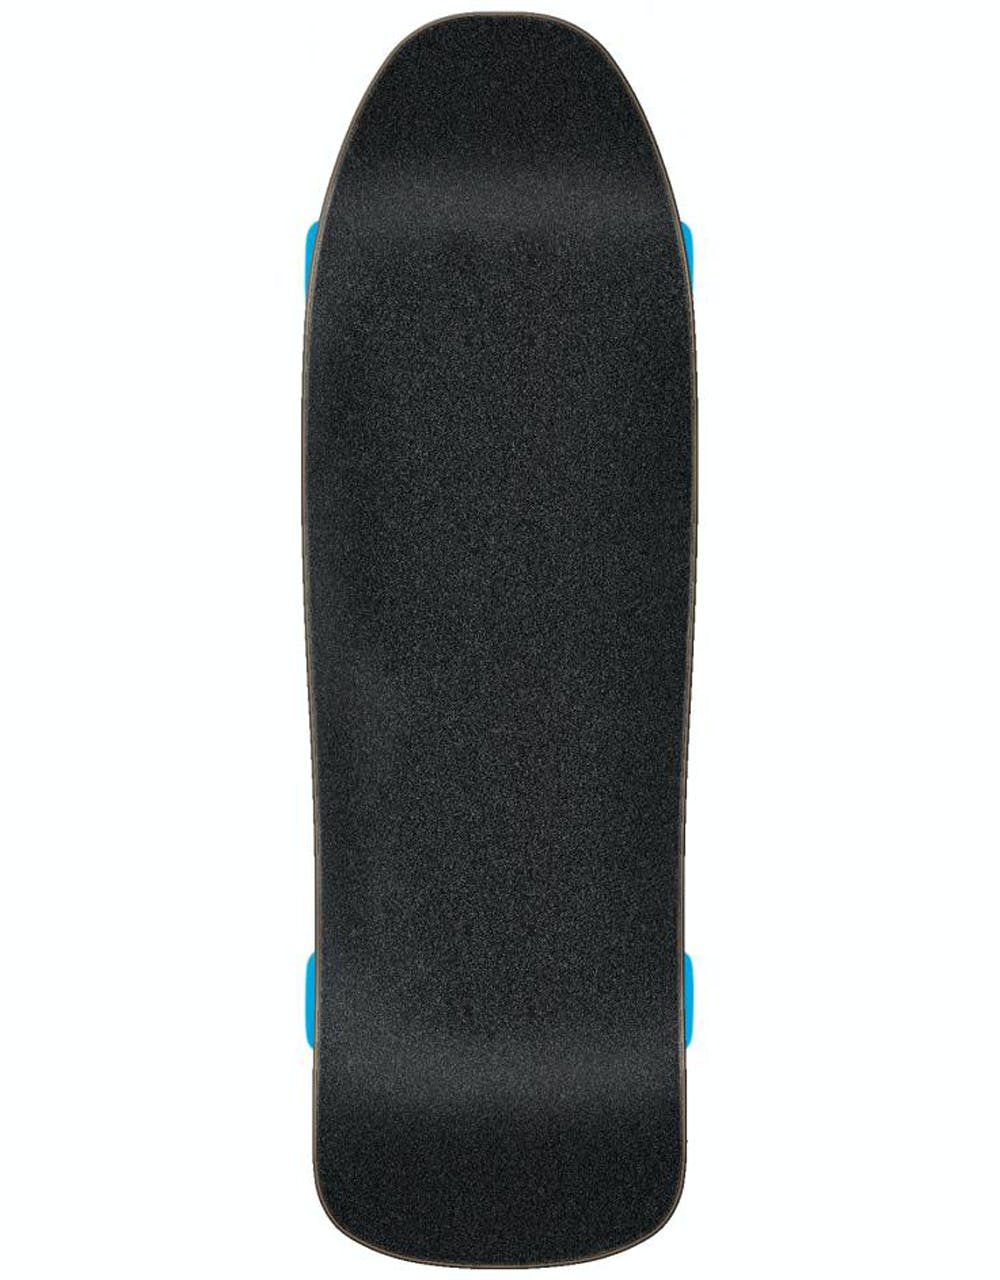 Santa Cruz Screaming Hand Foil 80s Cruiser Skateboard - 9.35" x 31.7"